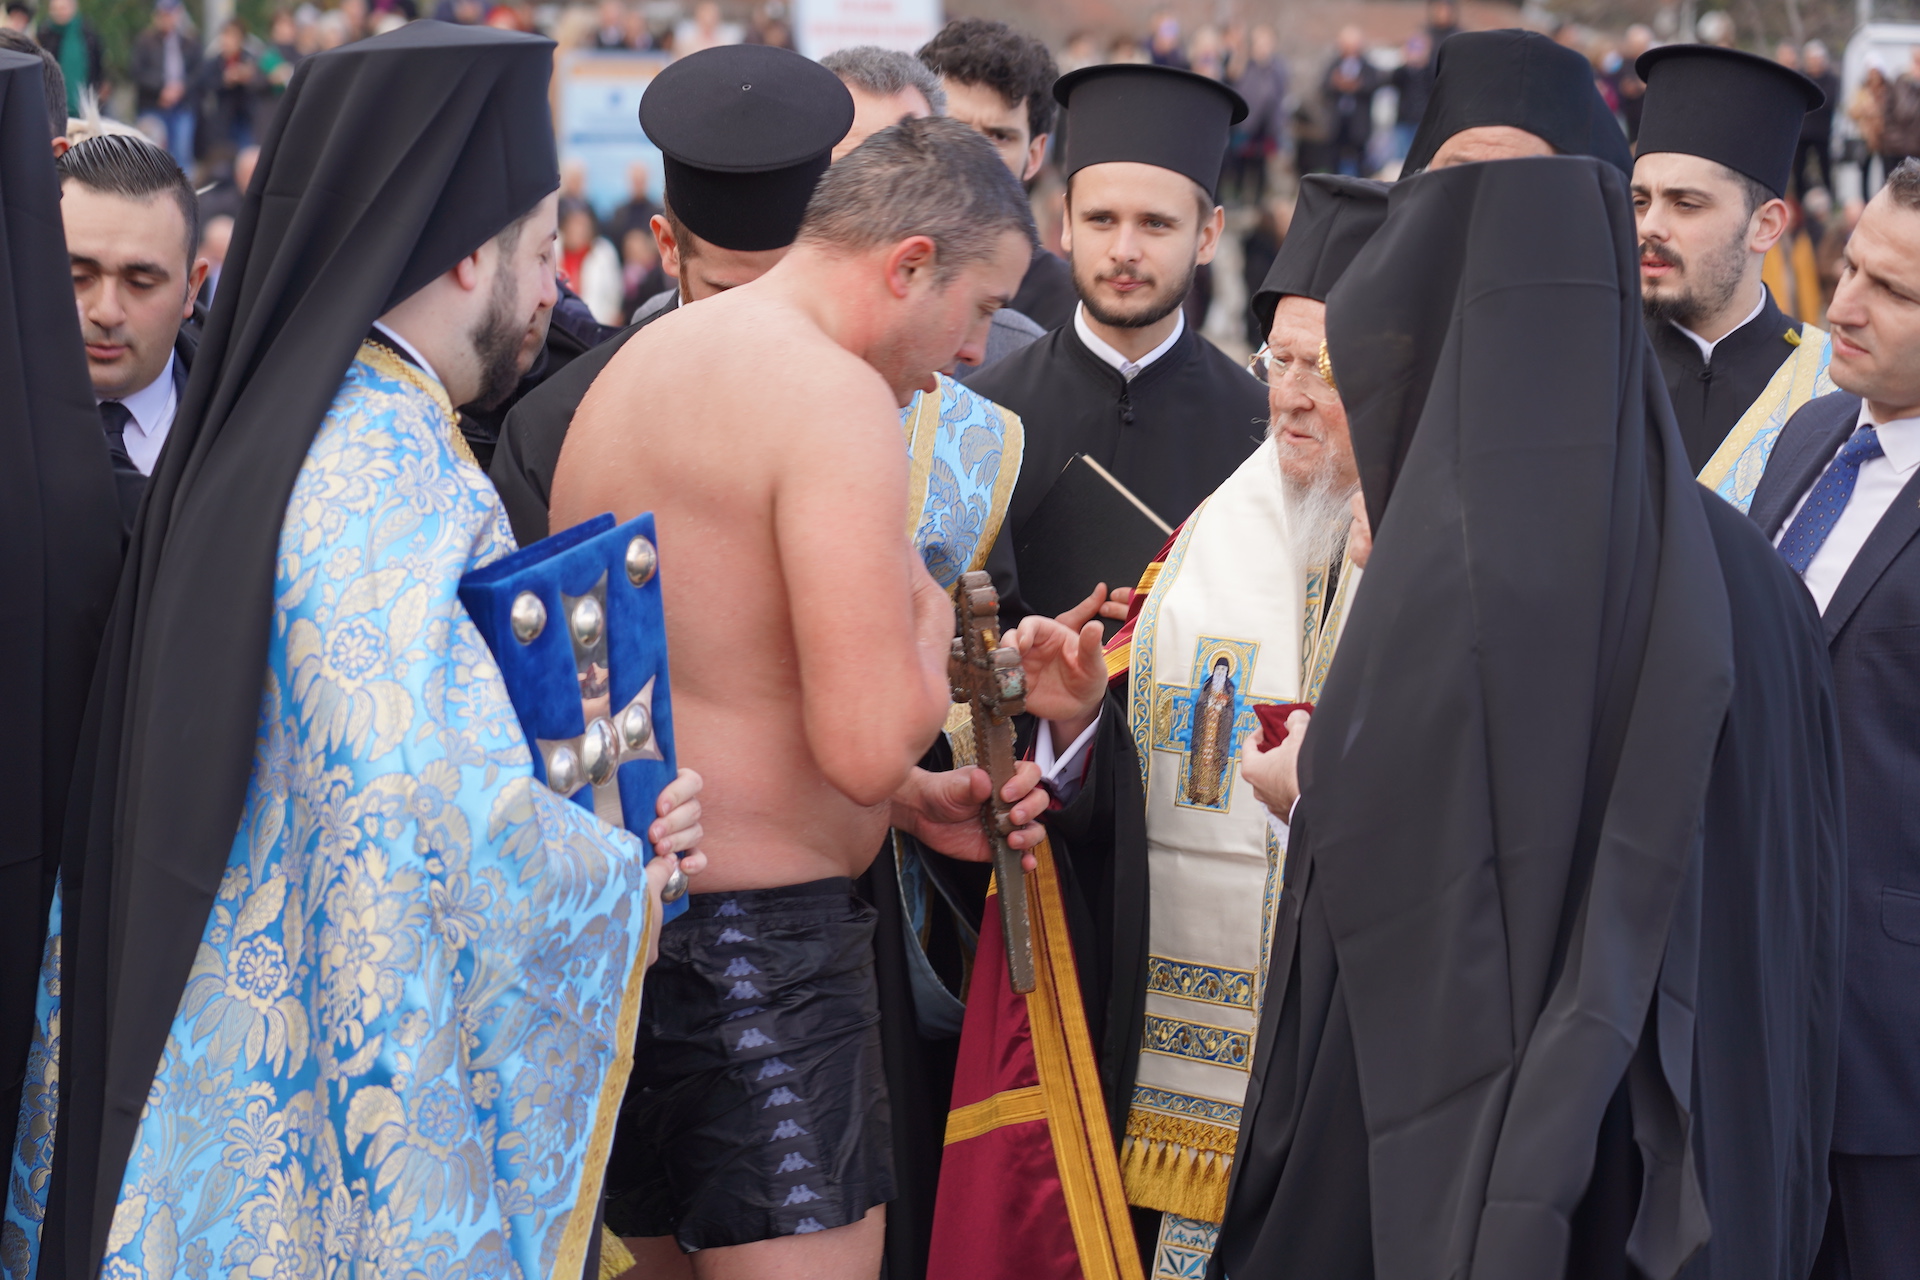 Ecumenical Patriarch Bartholomew celebrates the Feast of Epiphany in Triglia, Bithynia according to the Julian Calendar